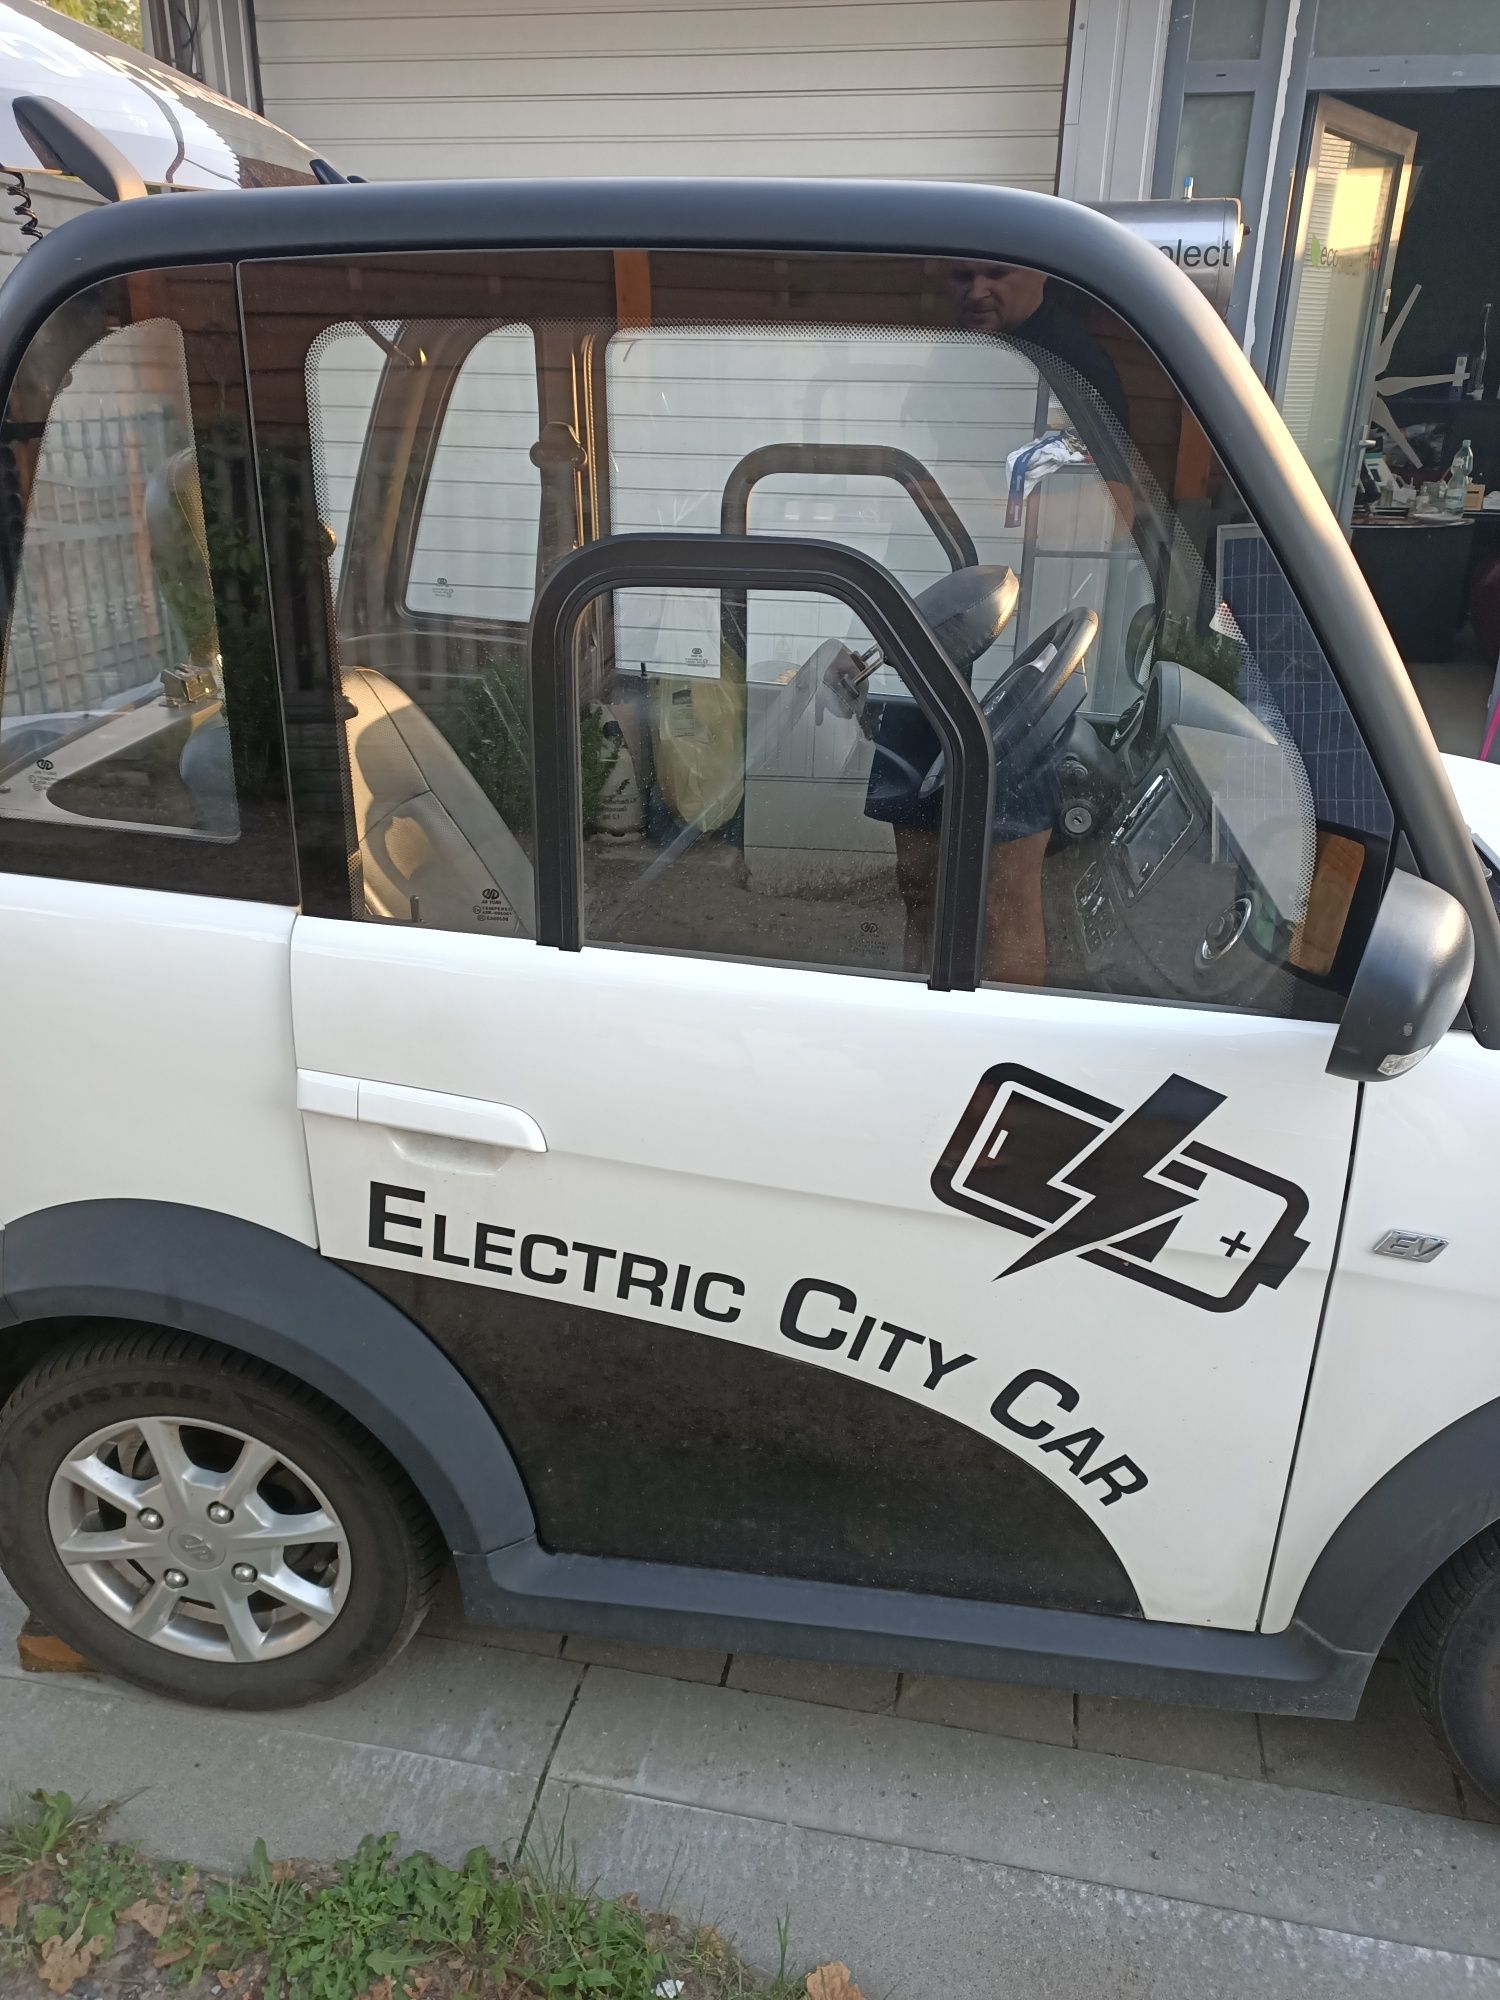 Samochód osobowy Elektryk city car